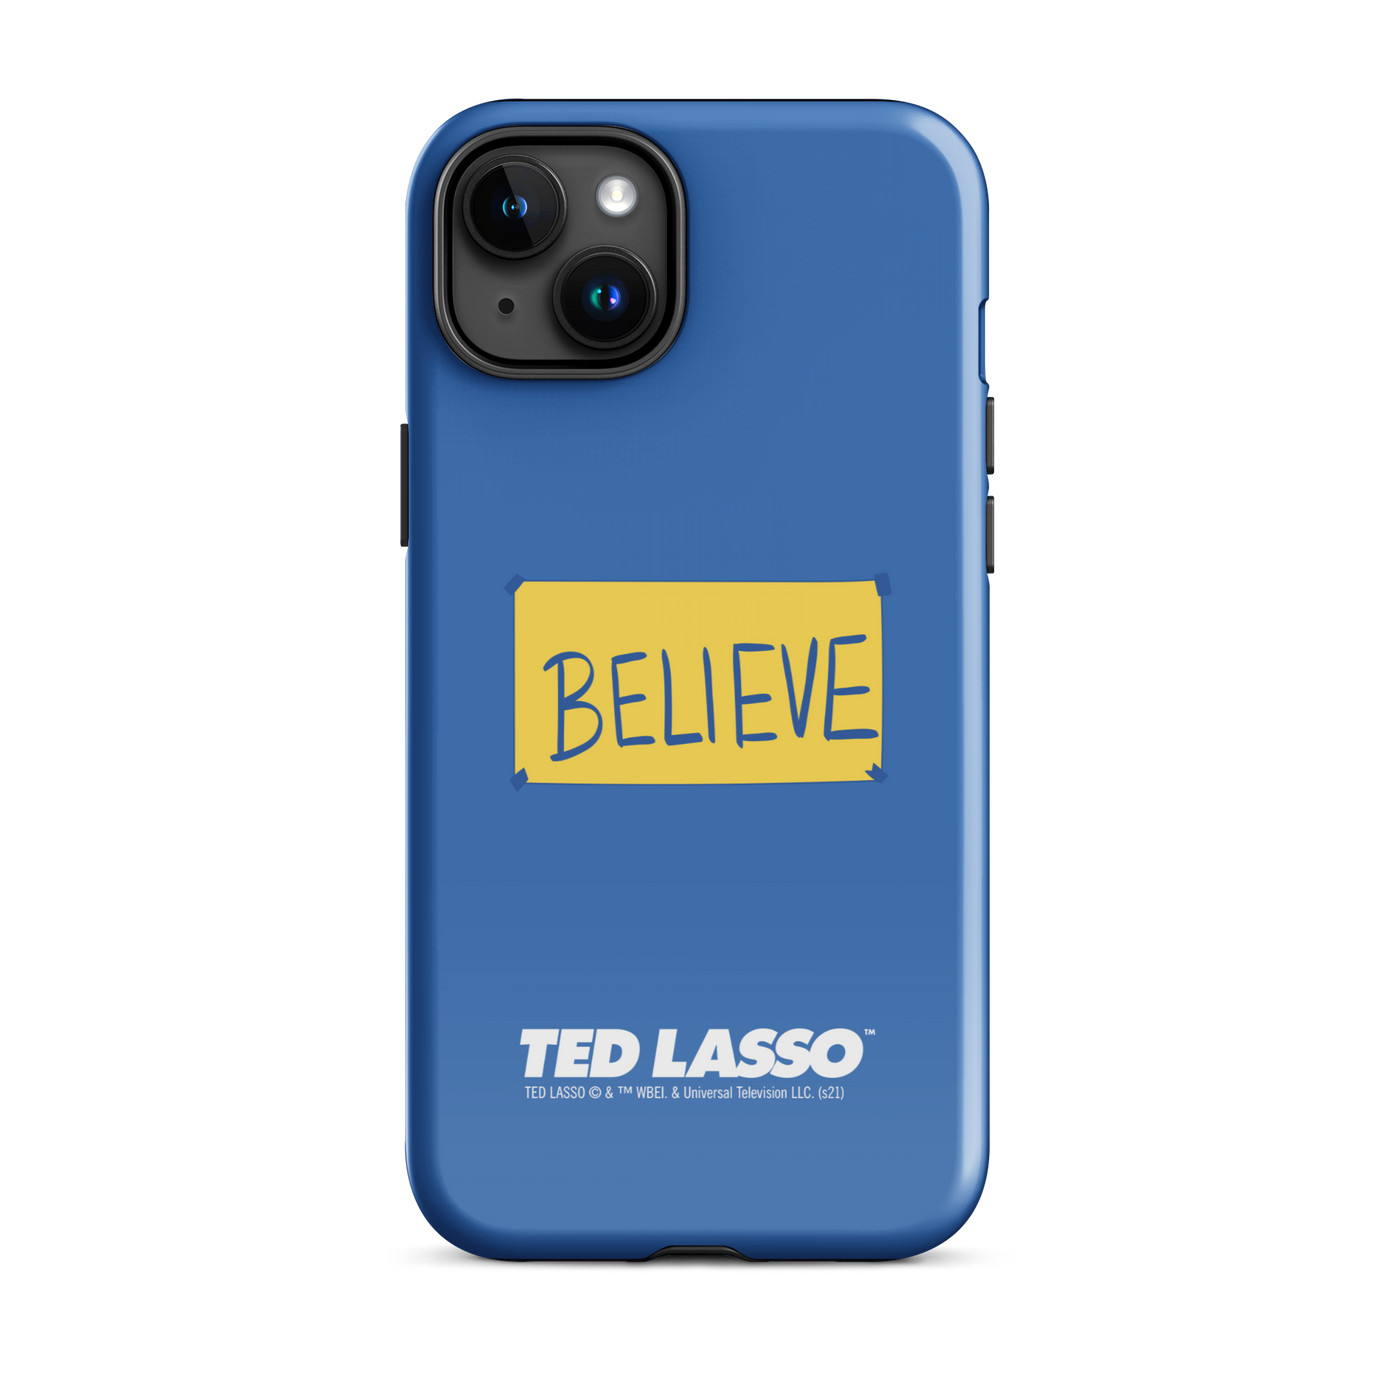 Ted Lasso A.F.C. Richmond Believe Sign Tough Phone Case - iPhone